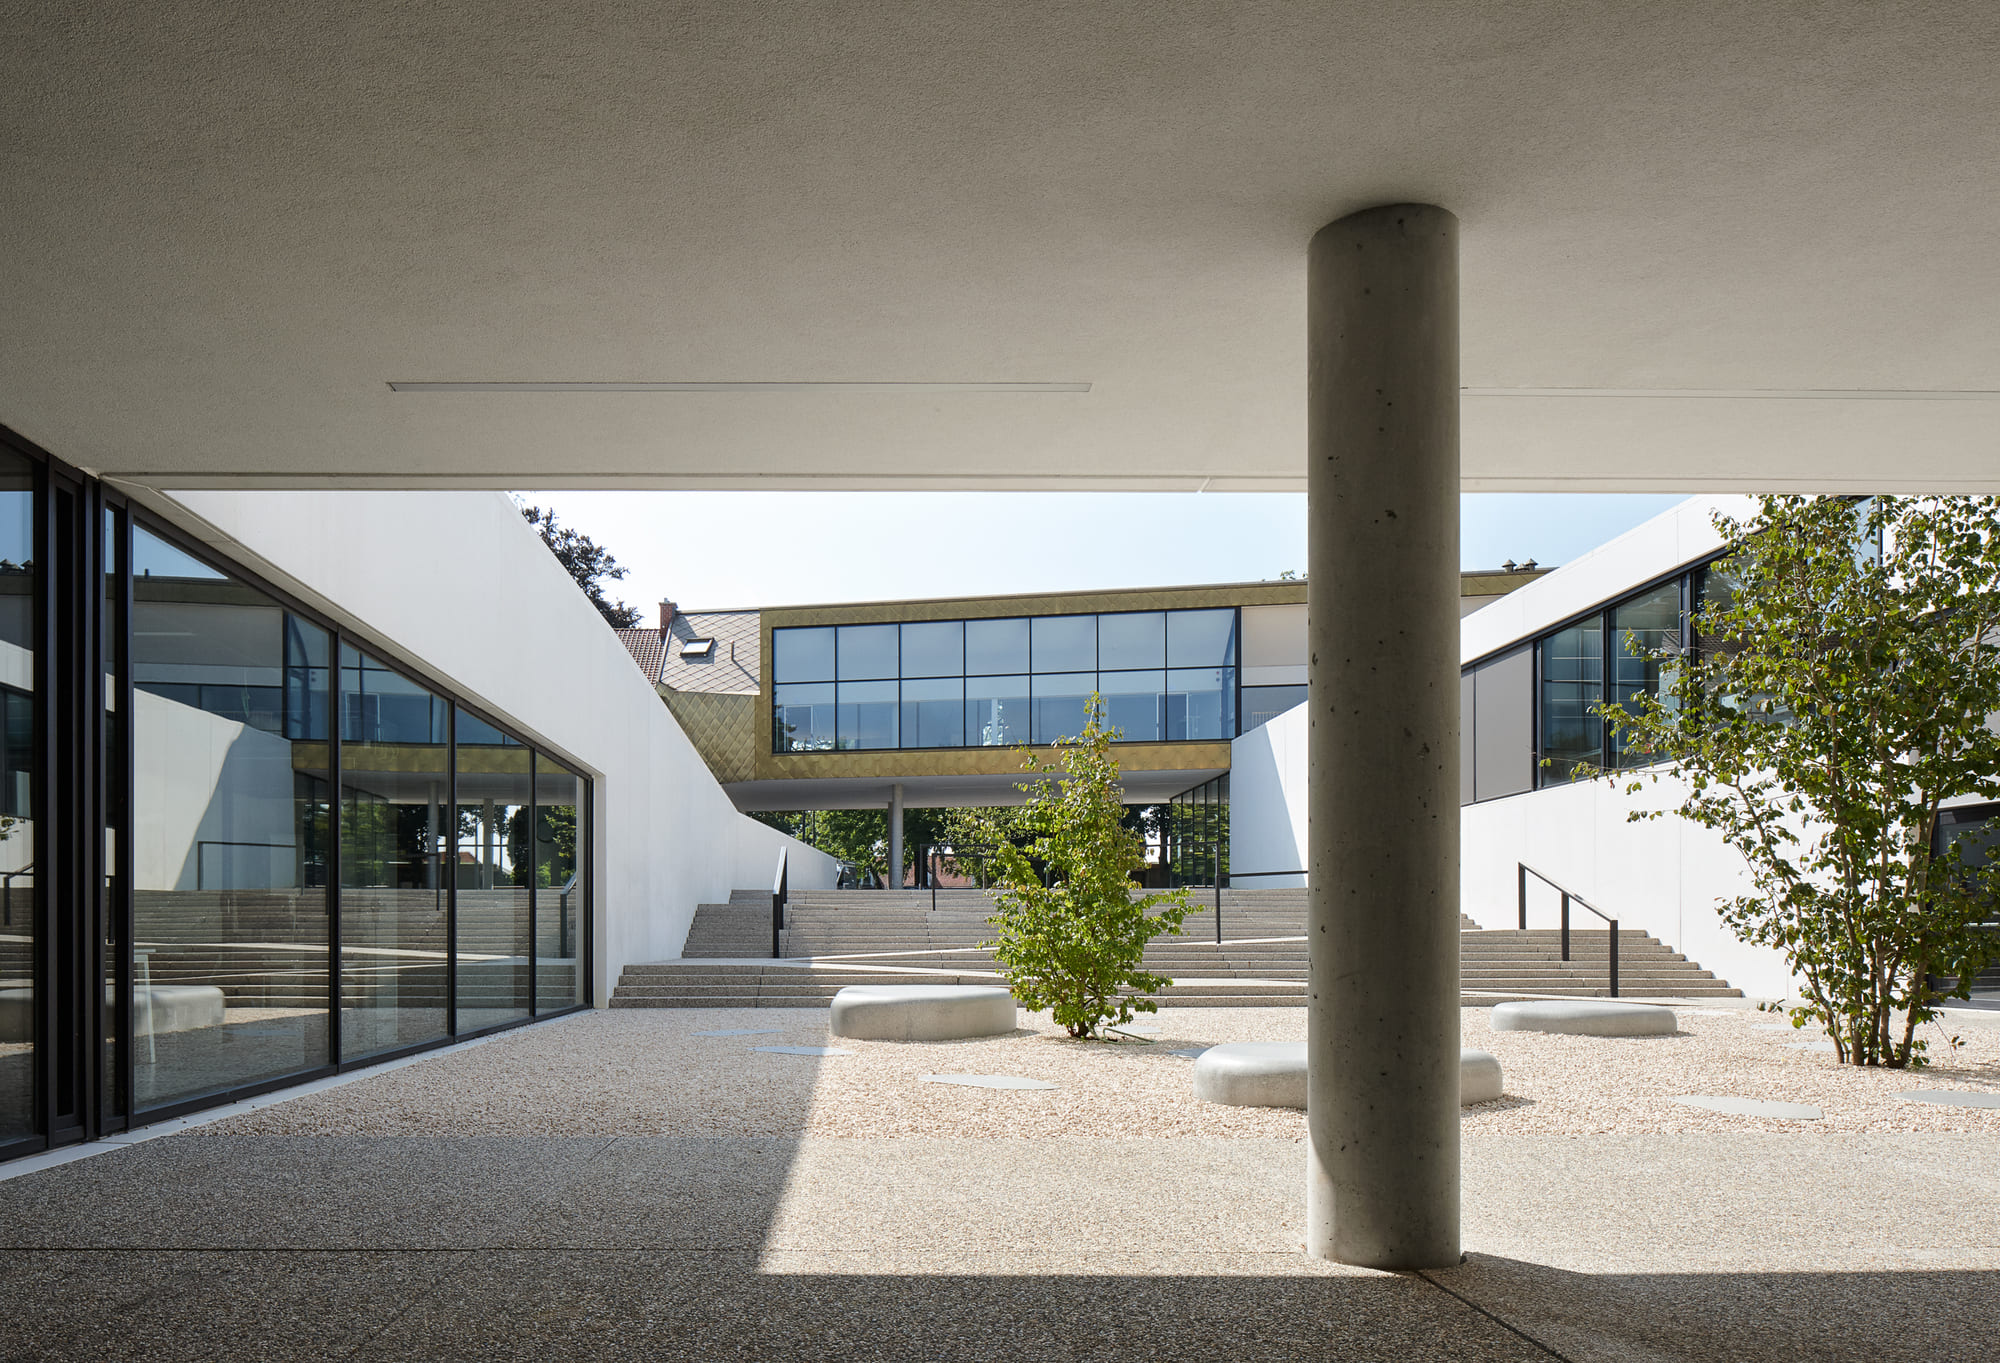 De Factorij – Cultural Center and Library in Zaventem